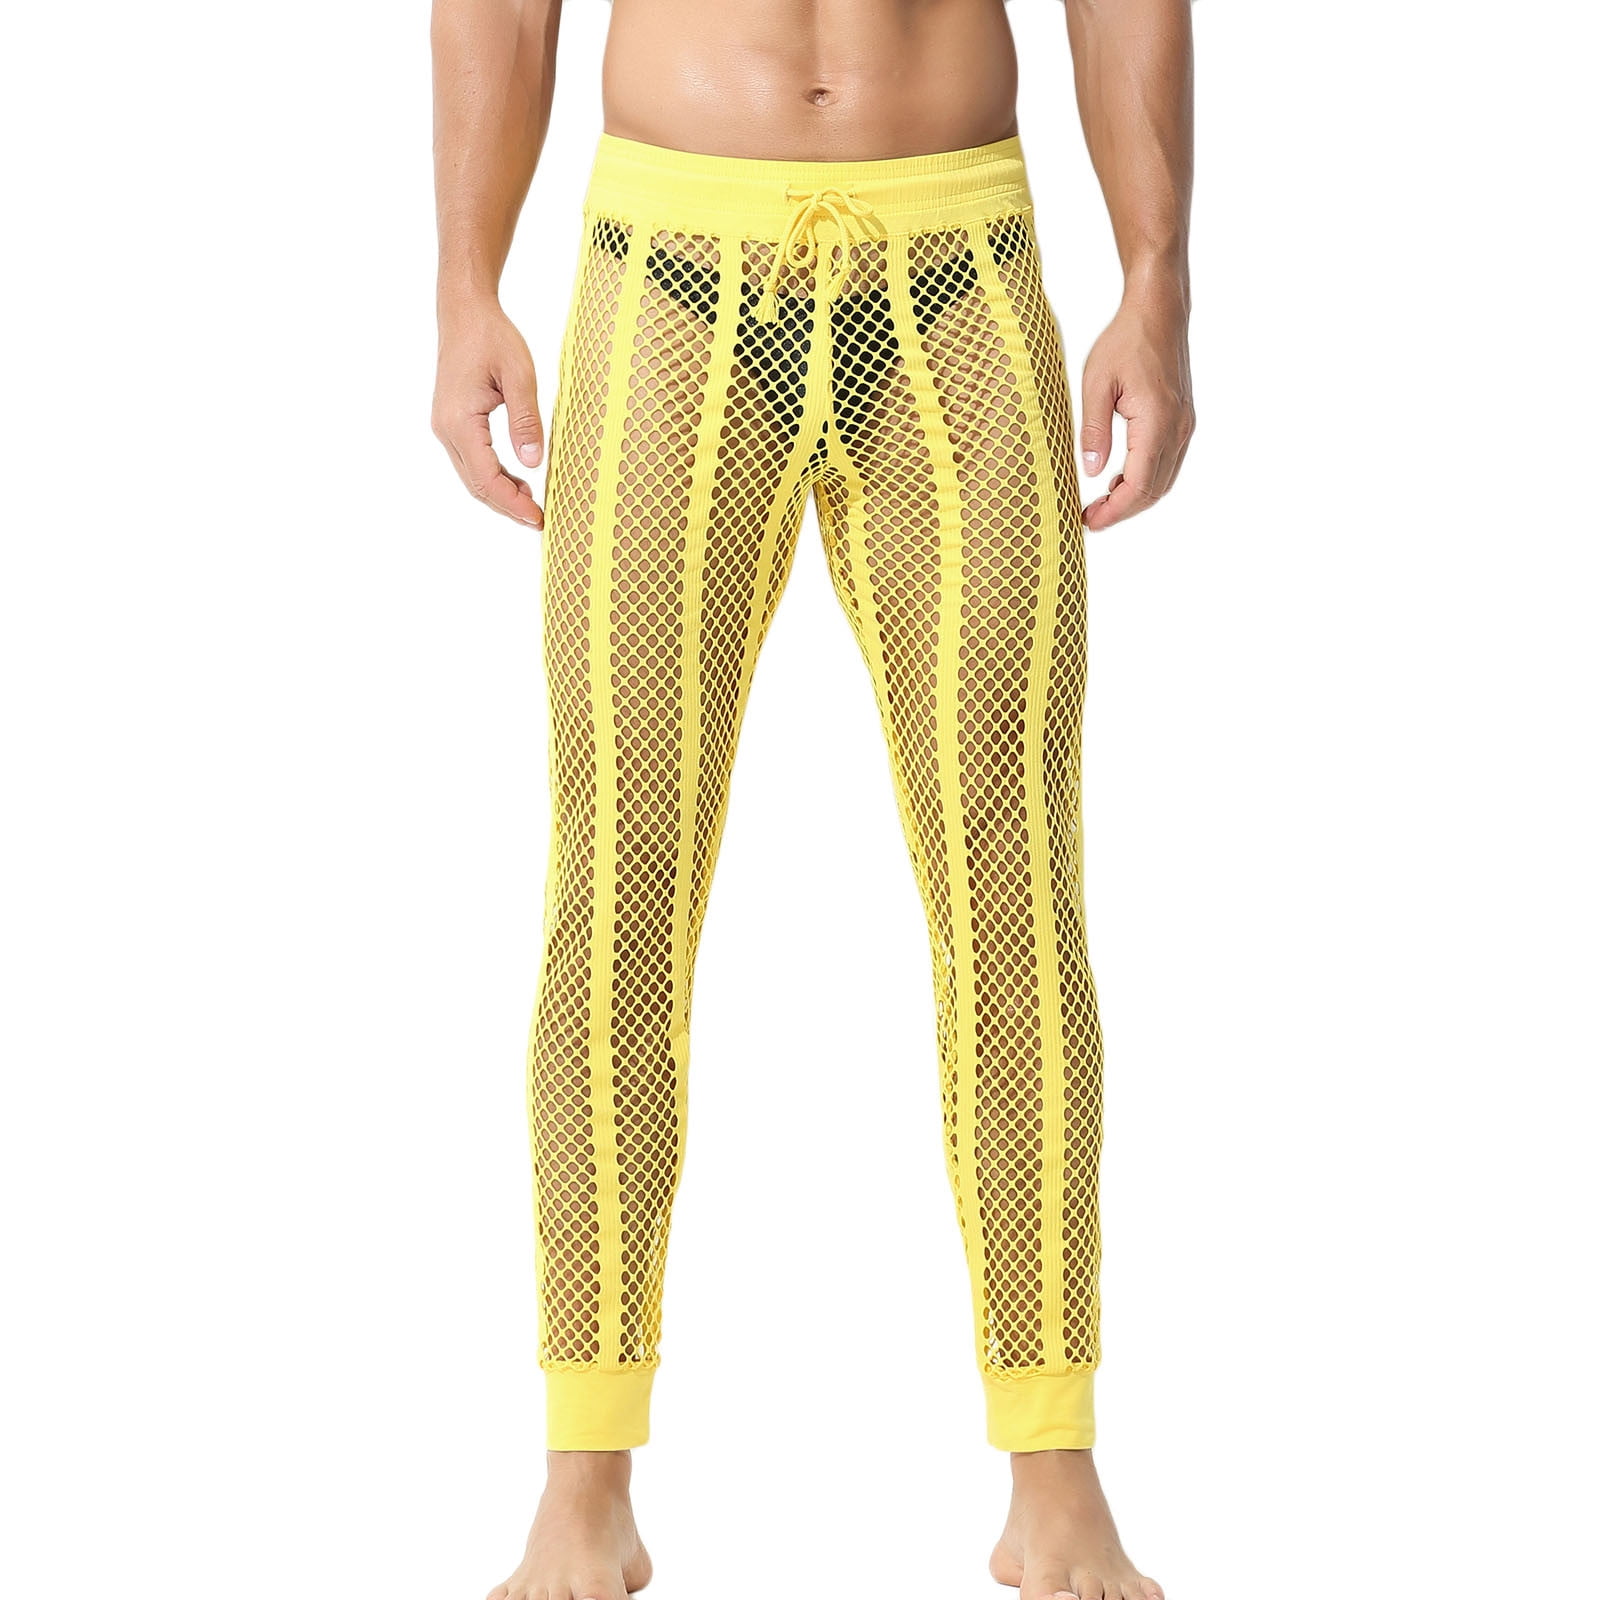 Penkiiy Cargo Pants for Men Men Elastic Waist Sexy Solid Casual Mesh Striped Breathable Nine cent Cutout Pants Yellow Men s Pants e860432d b64e 4cc1 ba8d 4fb34ee23ebe.760f3213ce88c25280cd3f6ac9416c9f